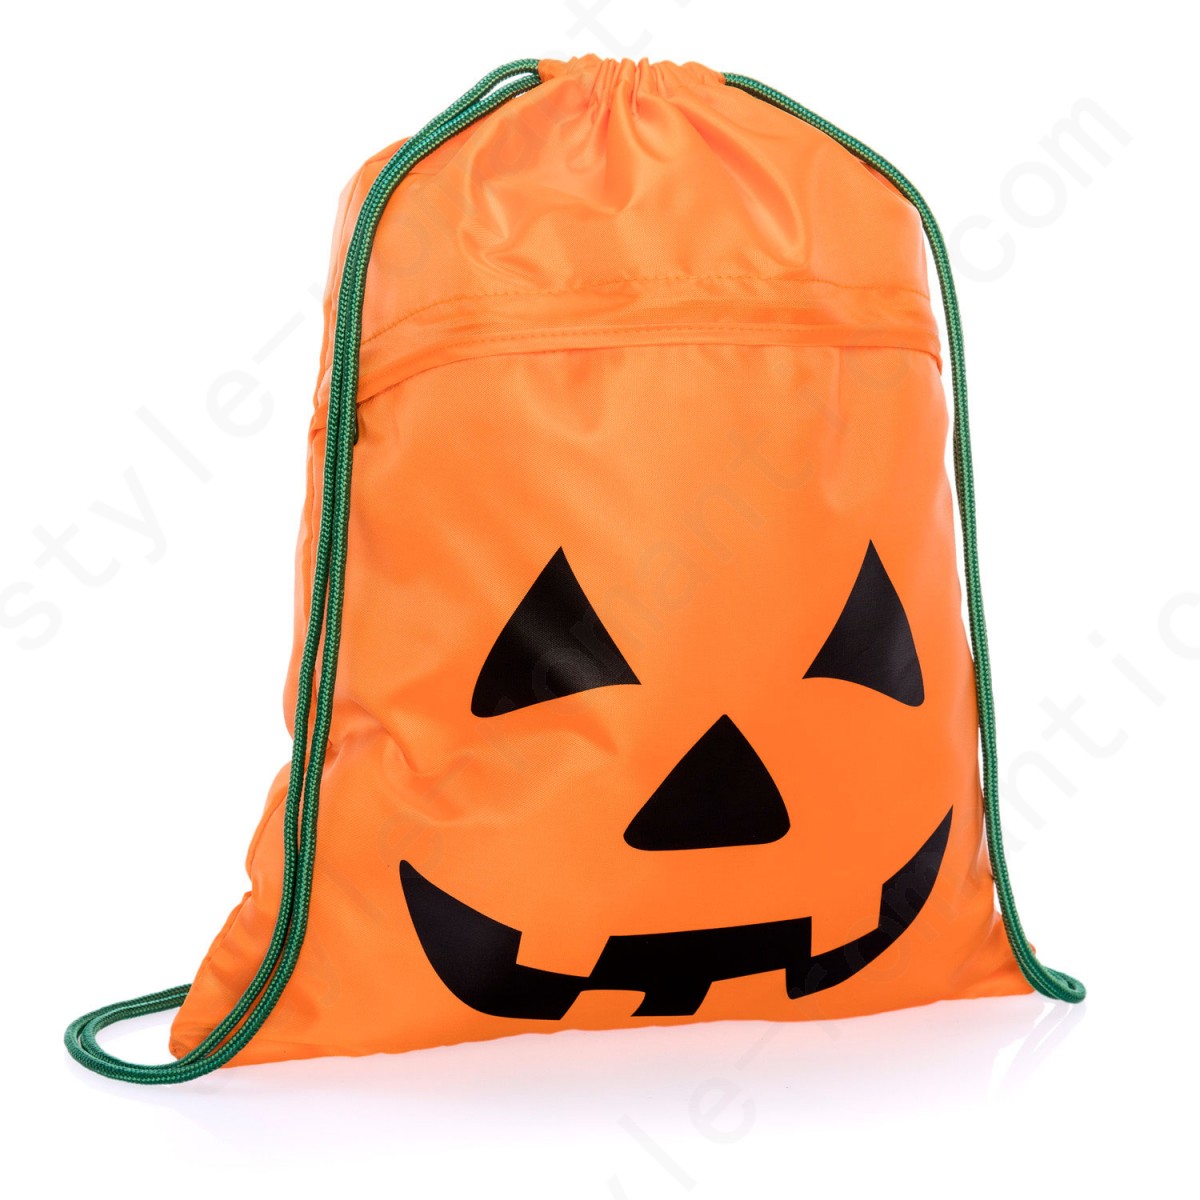 Thirty-One Gifts Cinch Sac - Playful Pumpkin Handbags Accessories - -0